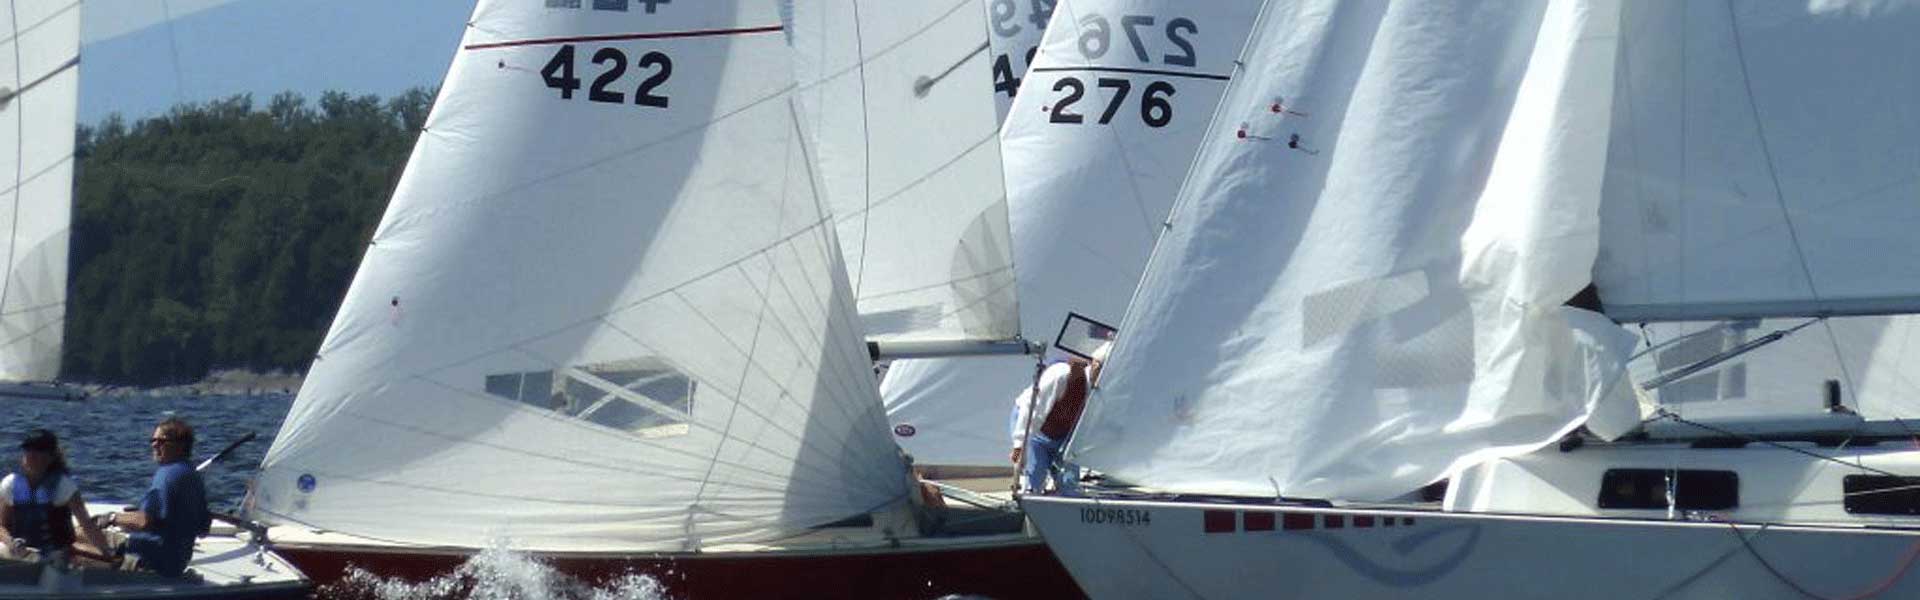 1920x600-shark-sails